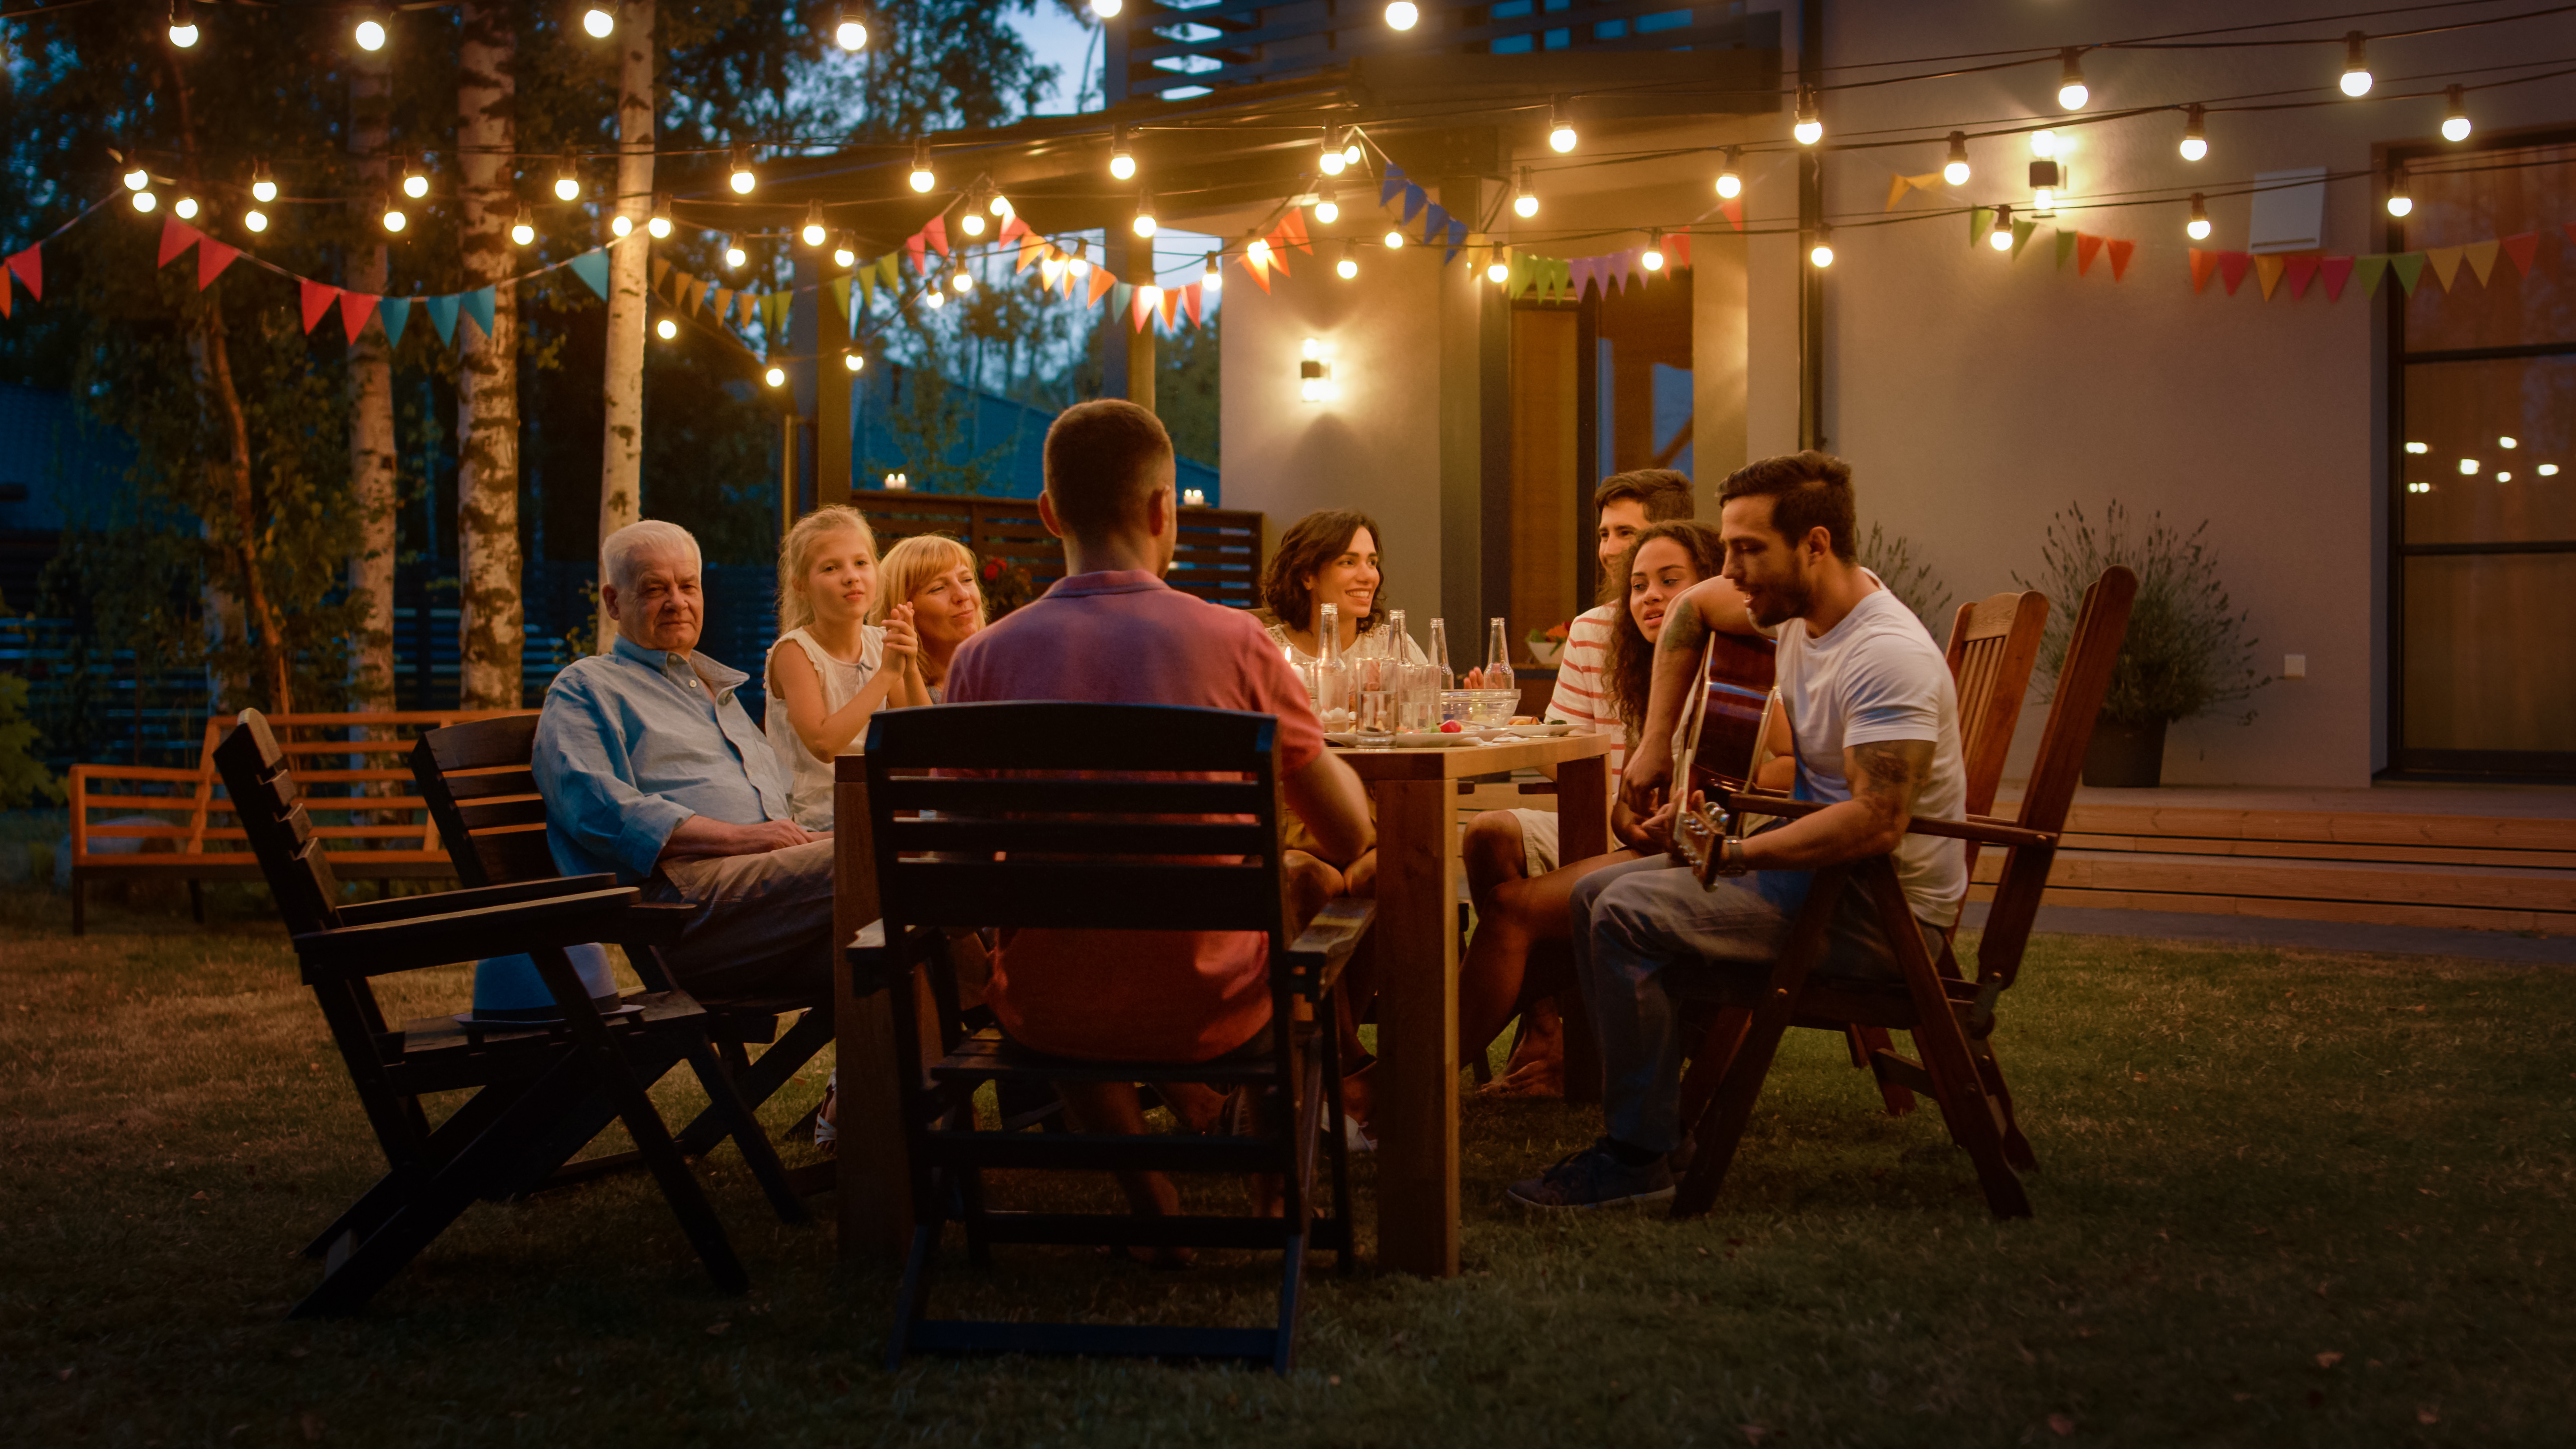 Une famille dînant en plein air | Source : Shutterstock